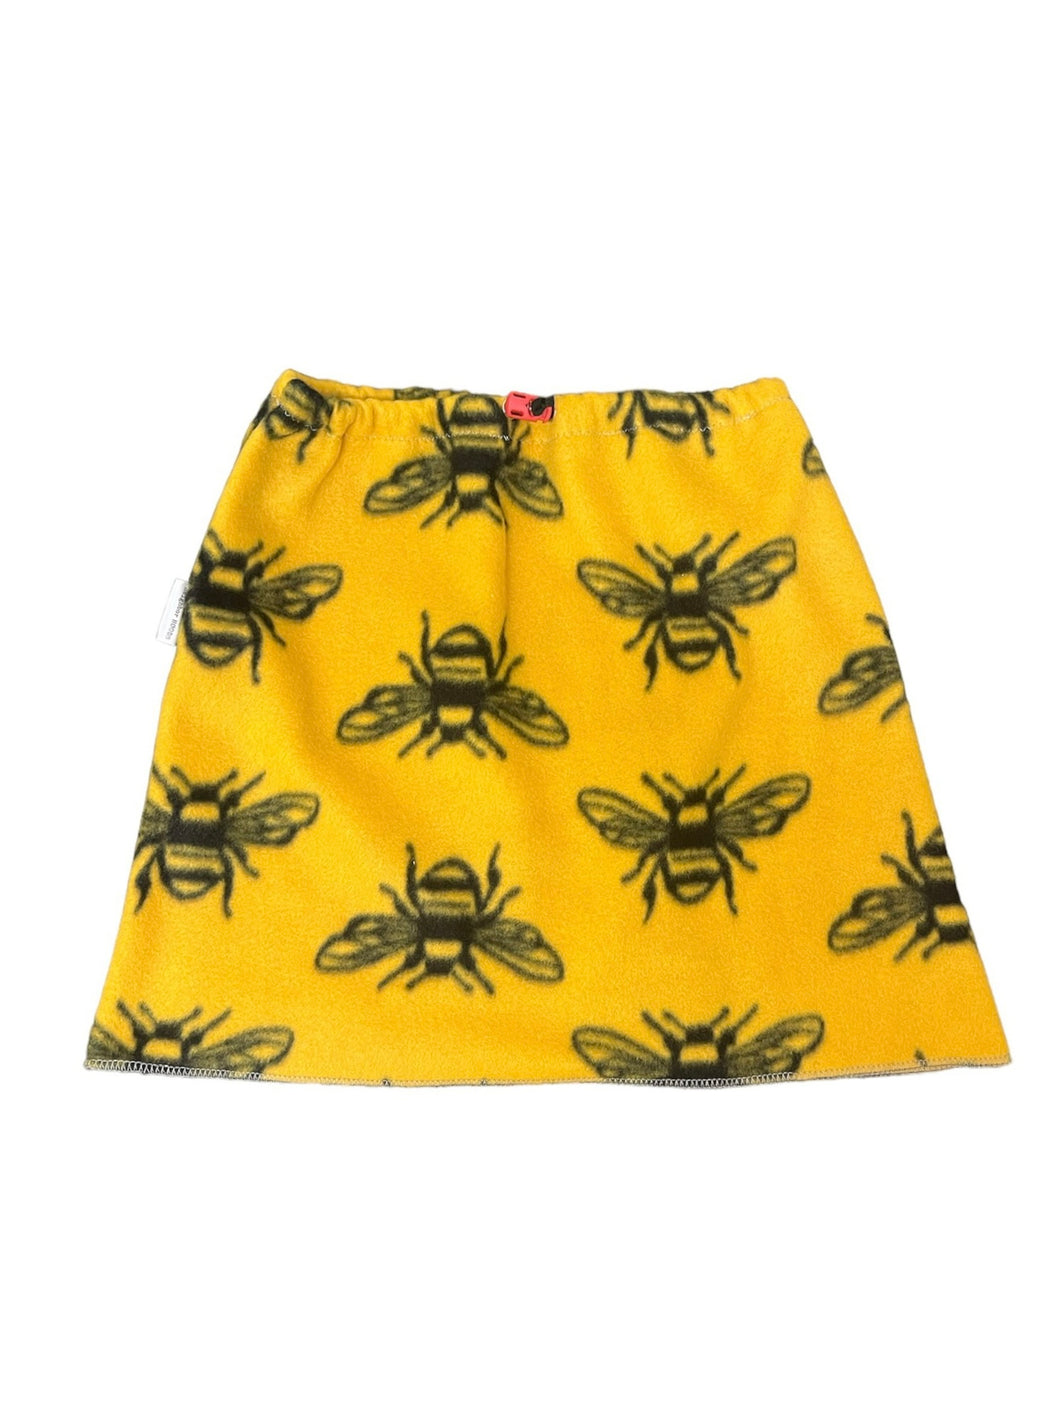 Kids’ Adventure Skirt, Busy Bees